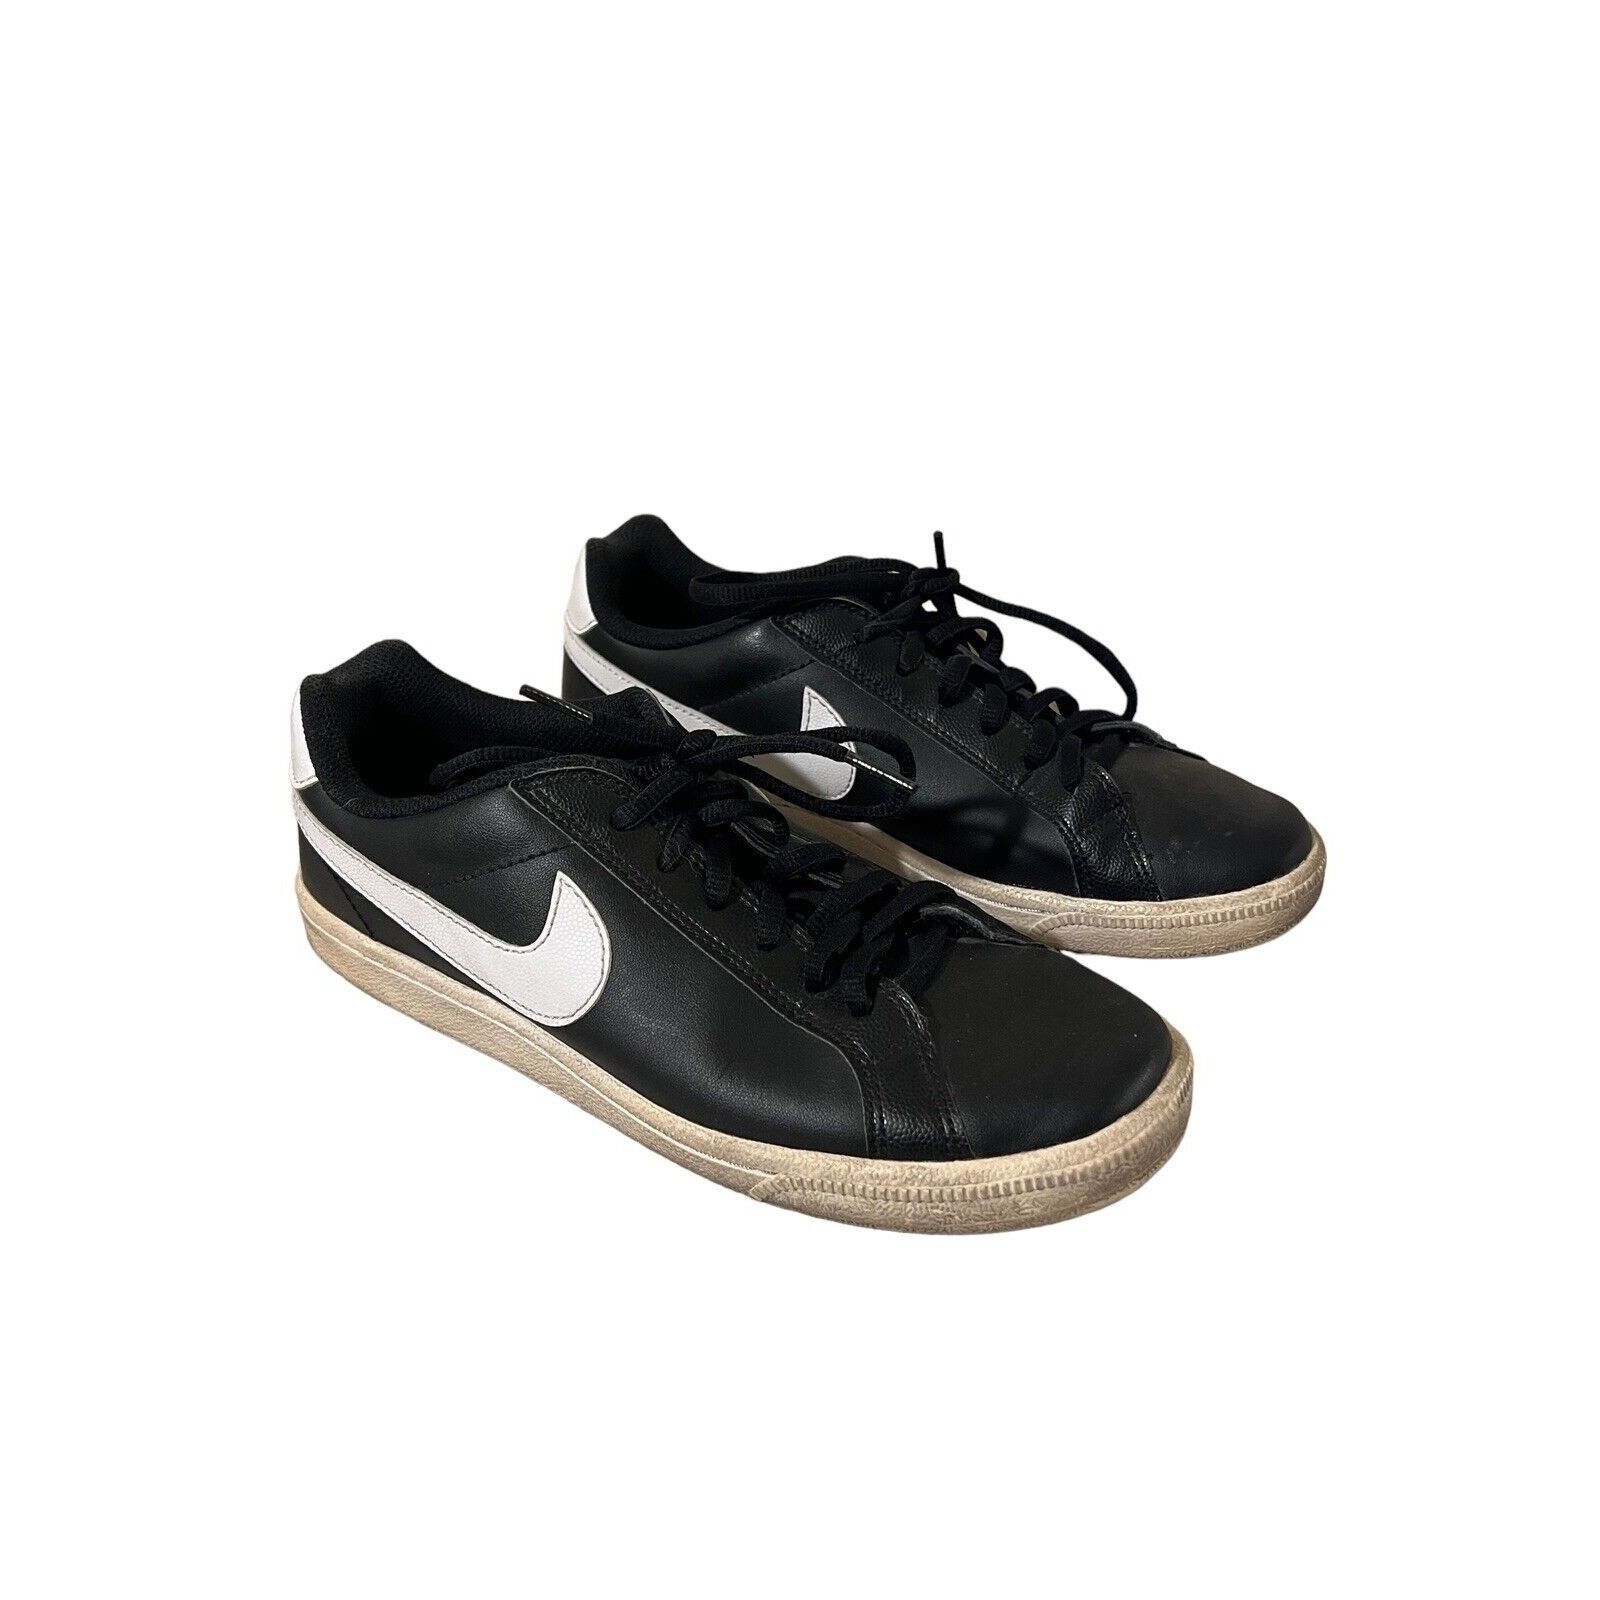 Nike 454256-017 Court Majestic Tennis Shoes - US Women’s 8.5 - Black & White